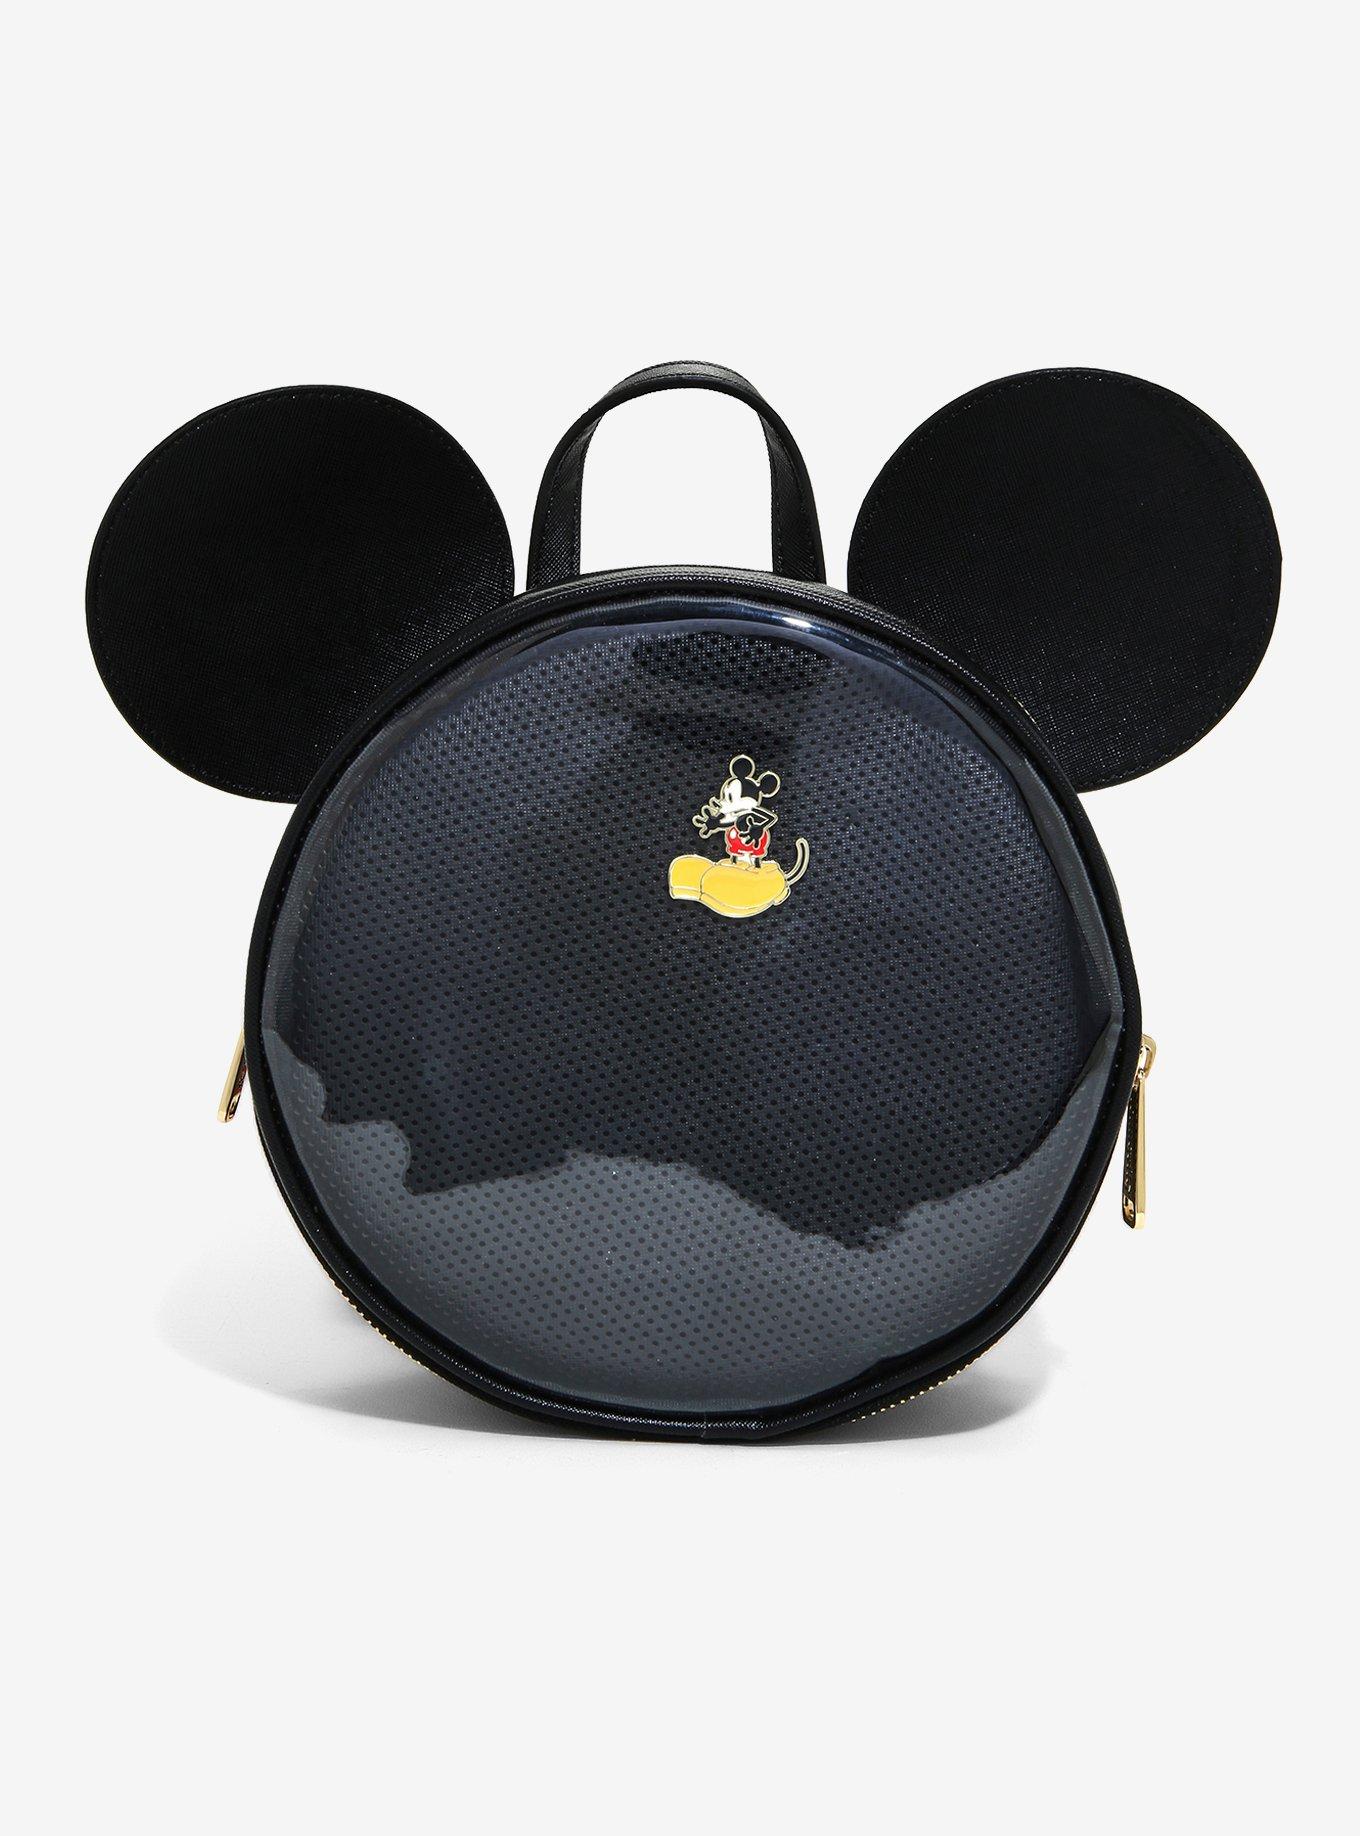 Loungefly Disney Sleeping Beauty Pin Trader Backpack 